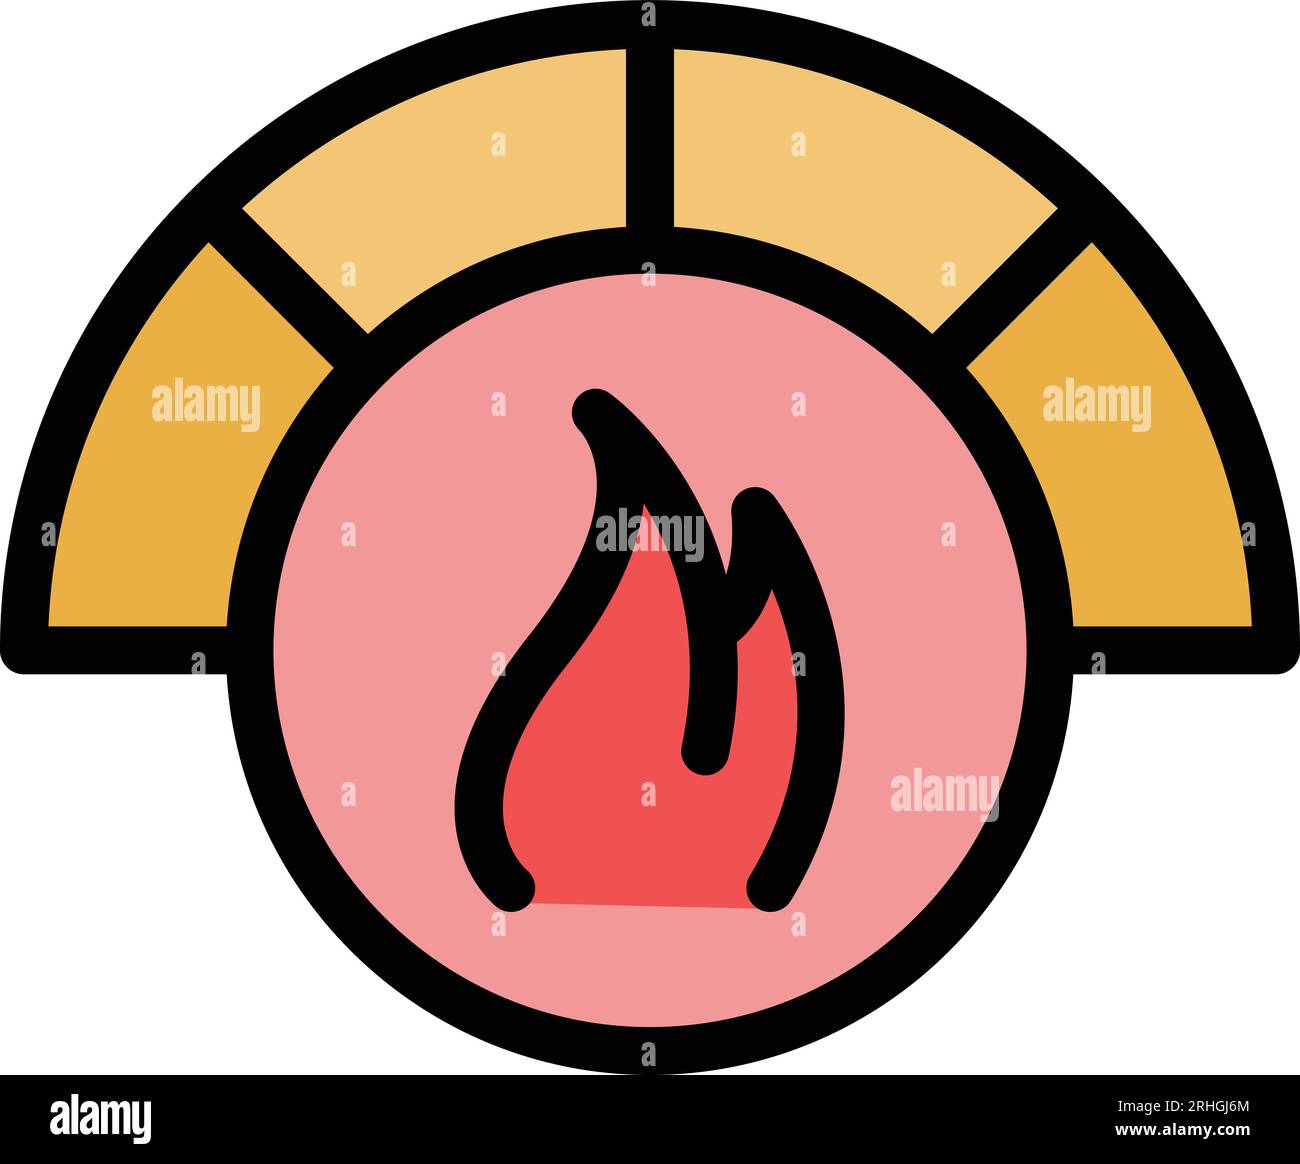 vetor de contorno do ícone do metabolismo de fogo. sistema químico 15101257  Vetor no Vecteezy